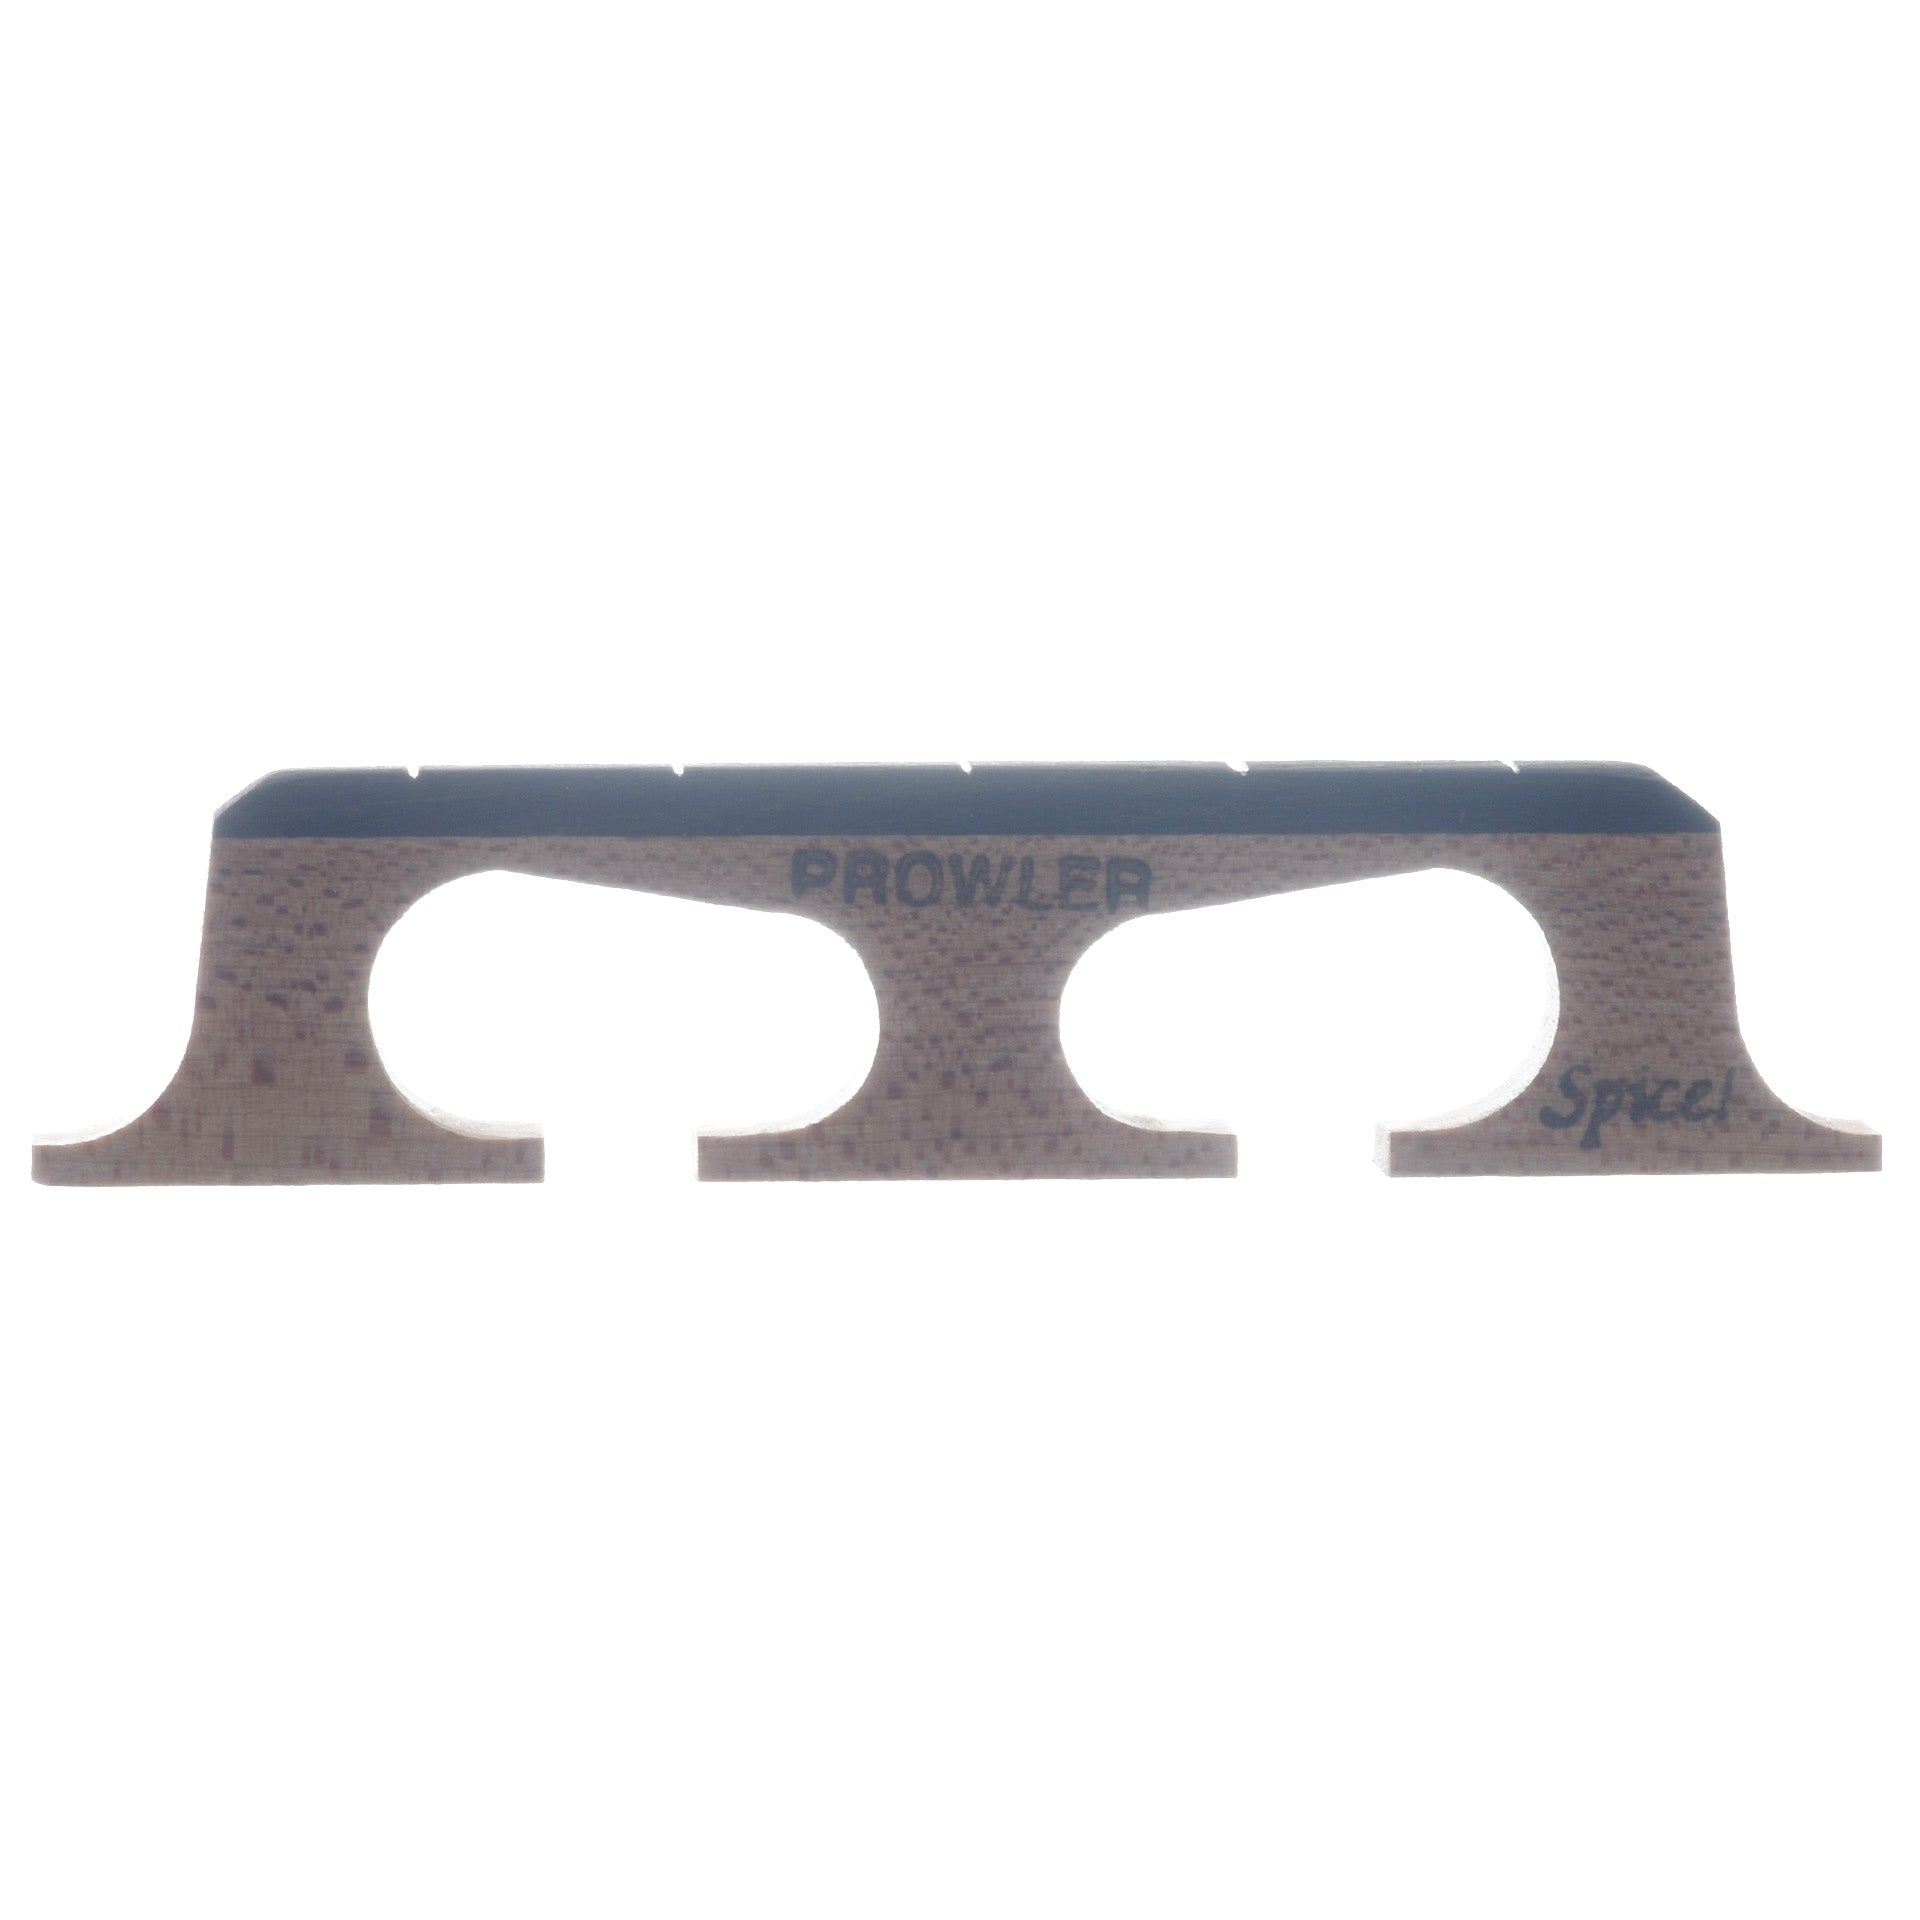 Image 2 of Kat Eyz Prowler Spice Banjo Bridge, .656" High, Crowe Spacing - SKU# KEPB-656-C : Product Type Accessories & Parts : Elderly Instruments